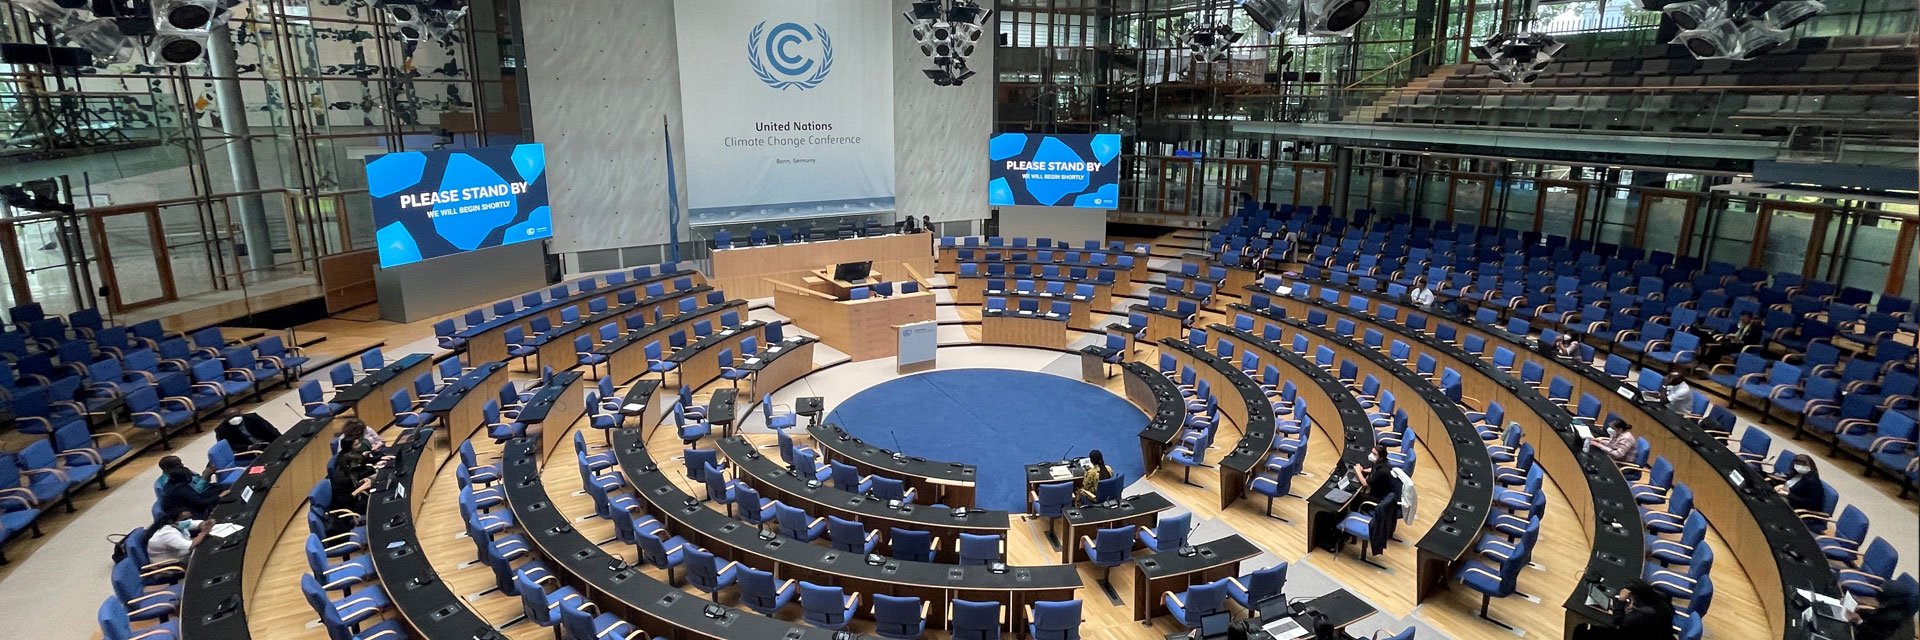 COP 15 conference negotiation room in Bonn.